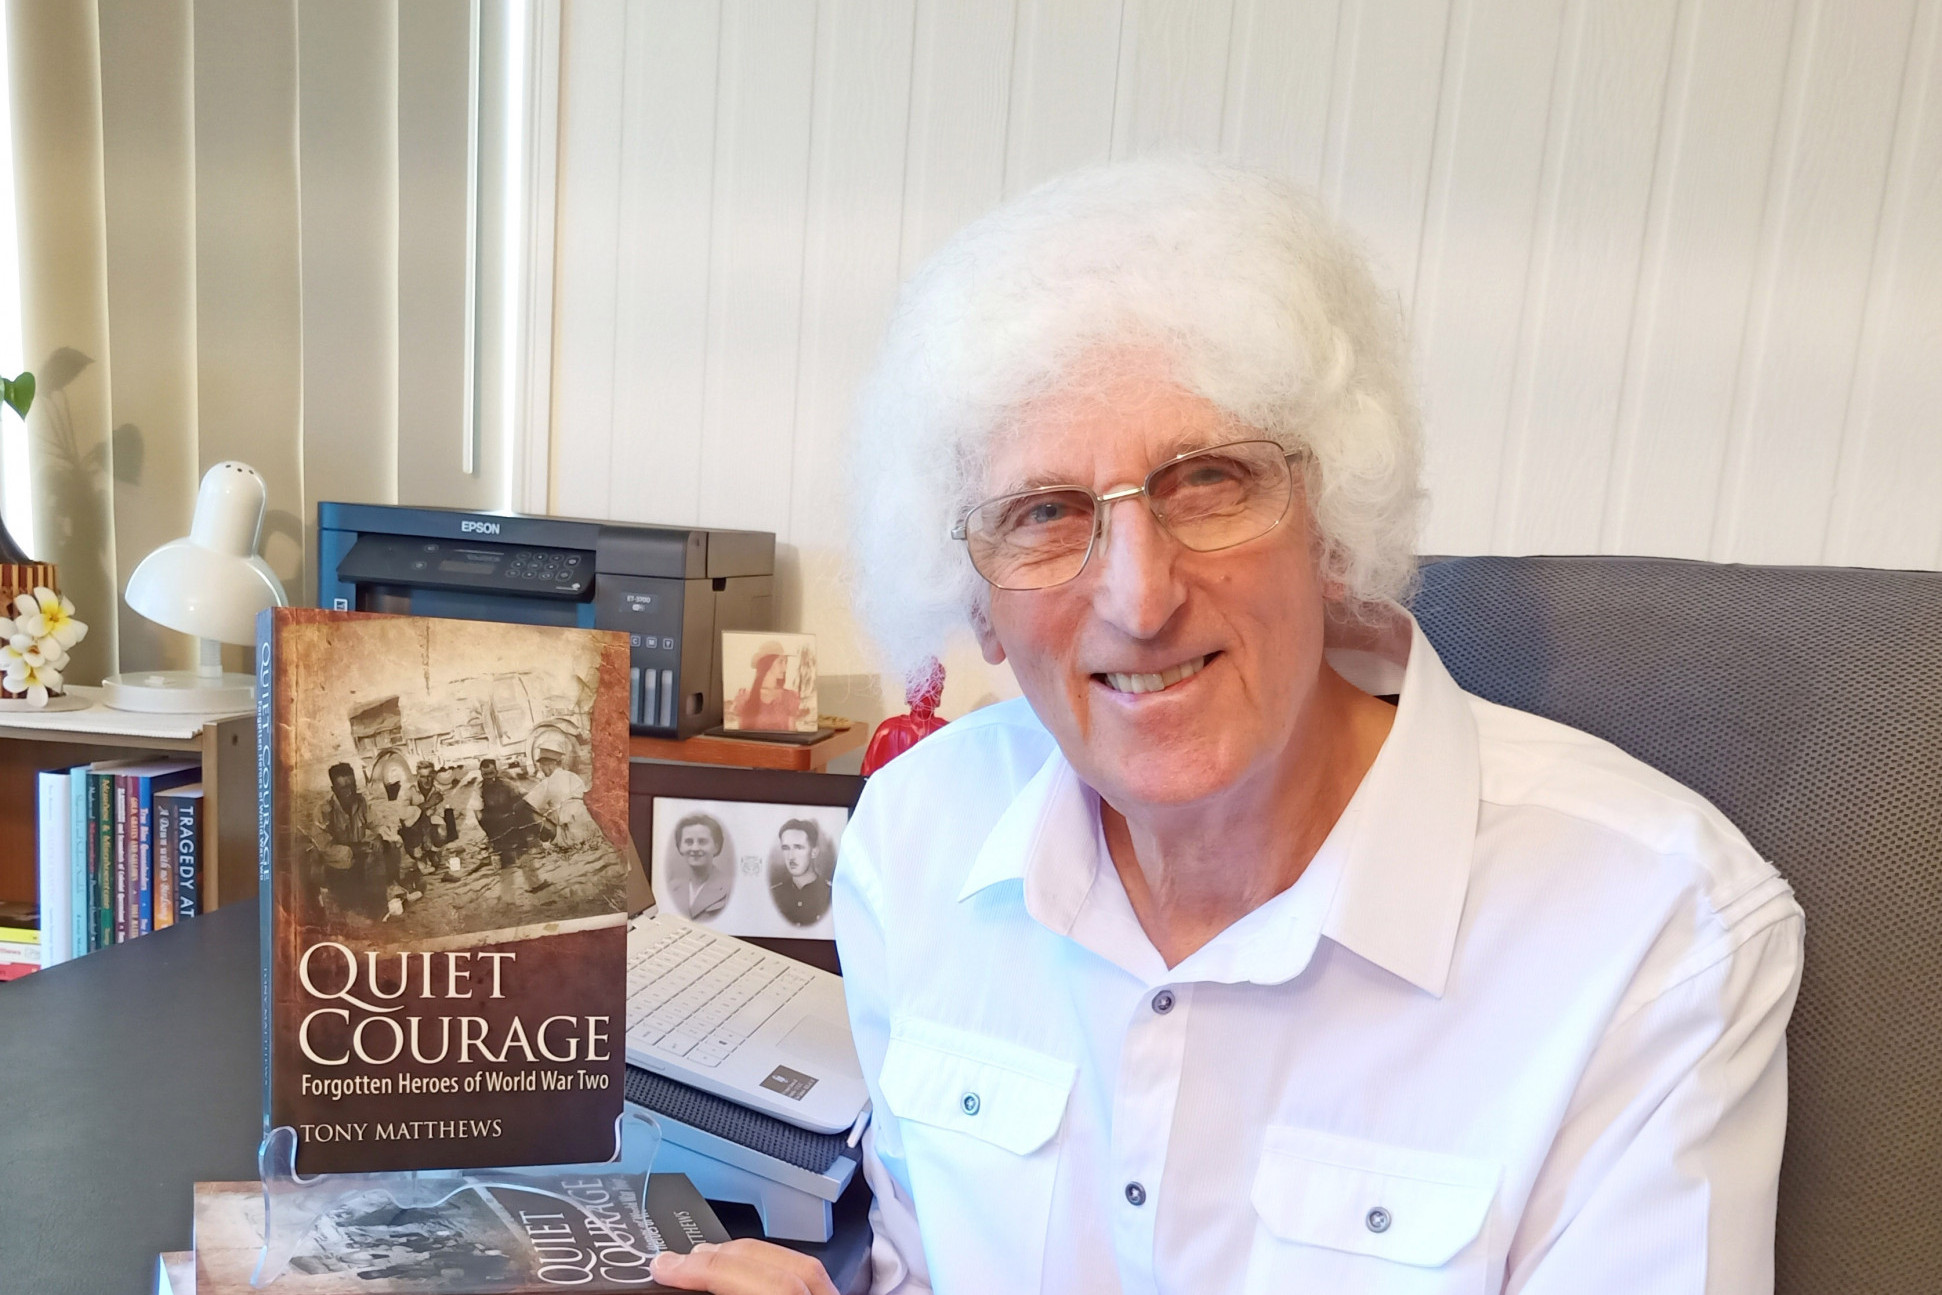 1. Author Tony Matthews with his latest book, Quiet Courage.